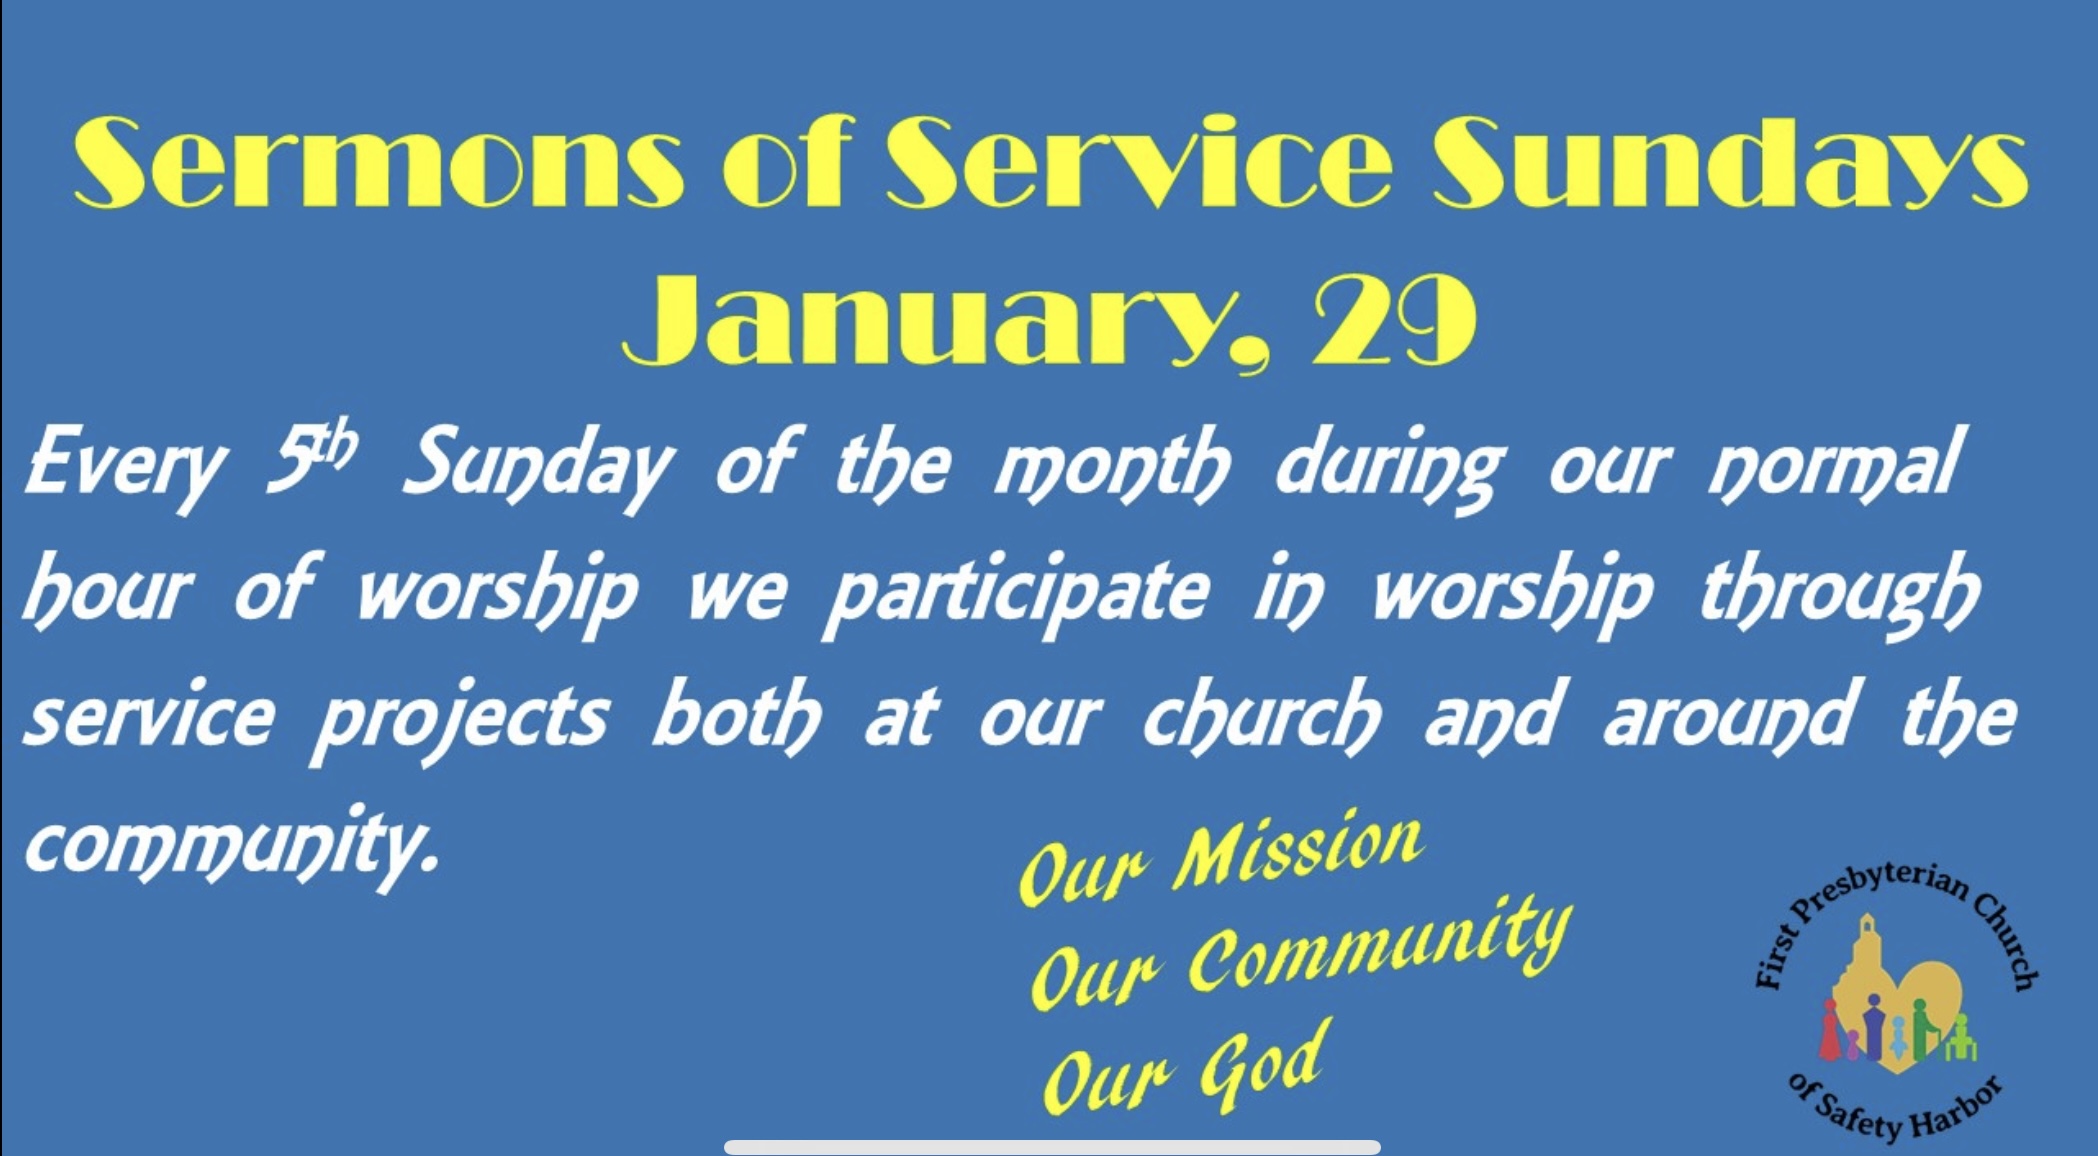 Sermons of Service Sunday